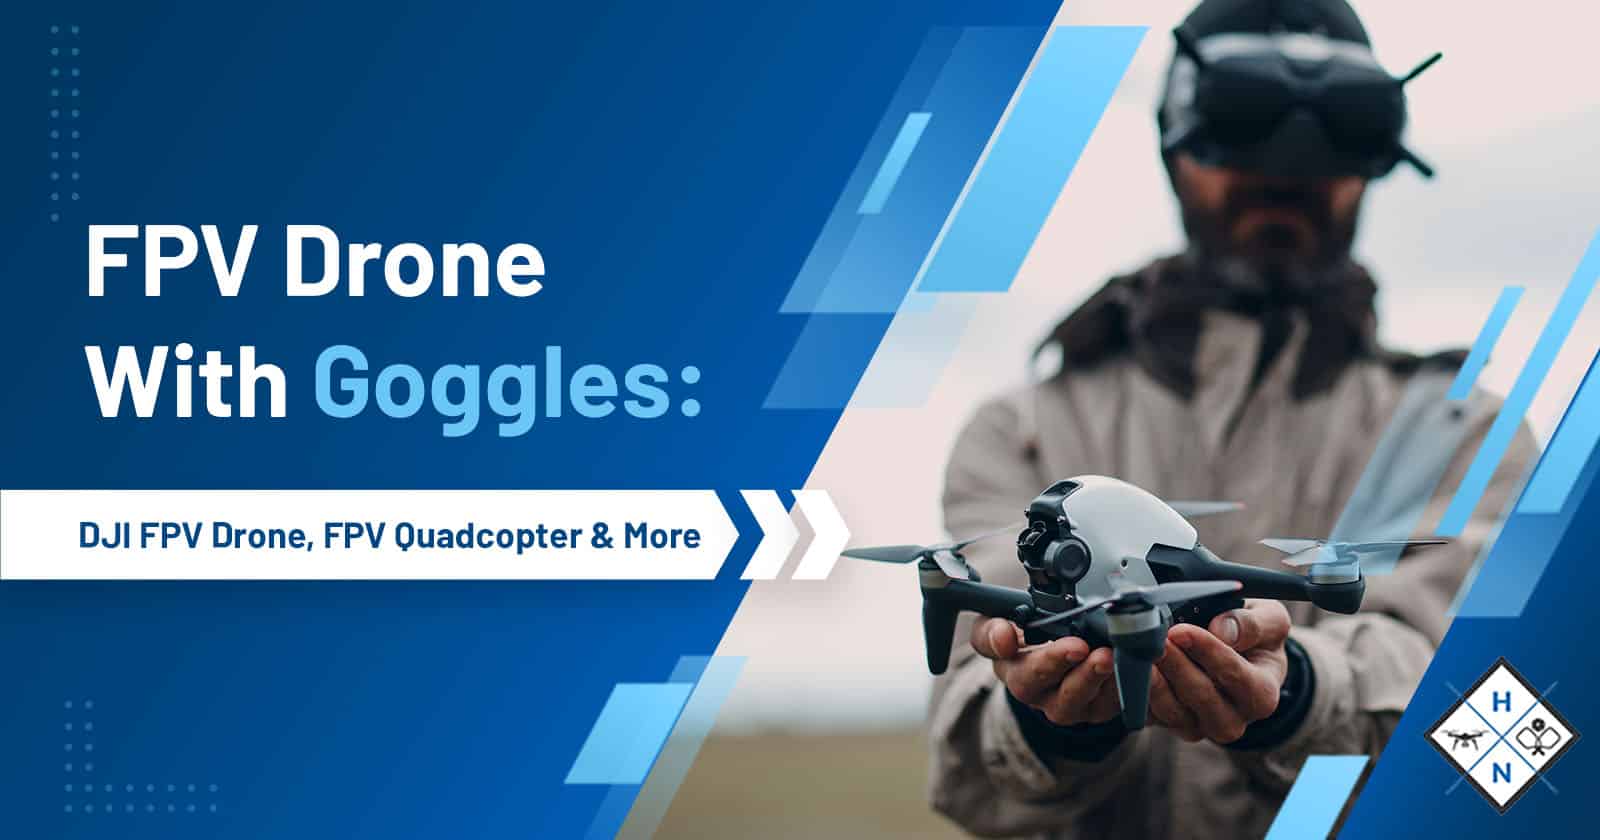 FPV Drone With Goggles: DJI FPV Drone, FPV Quadcopter & More